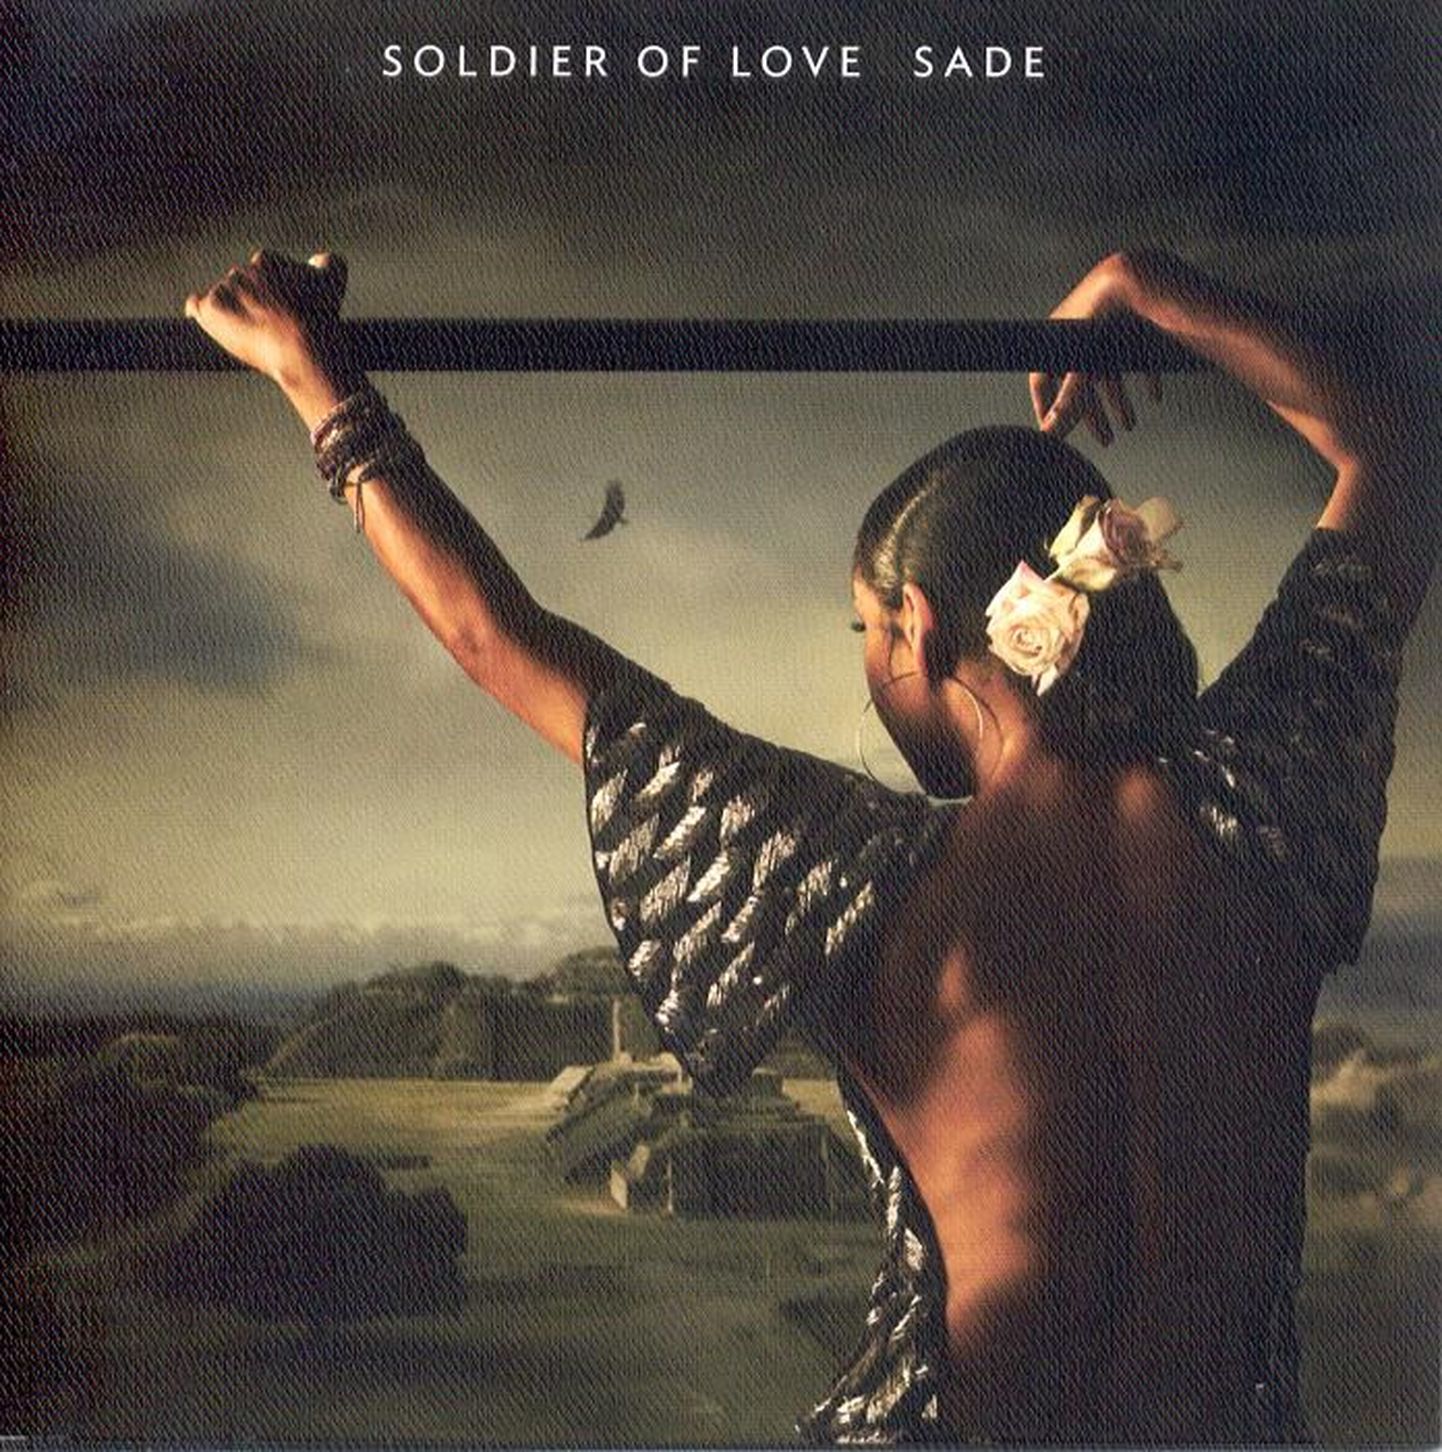 Sade “Soldier of Love”.